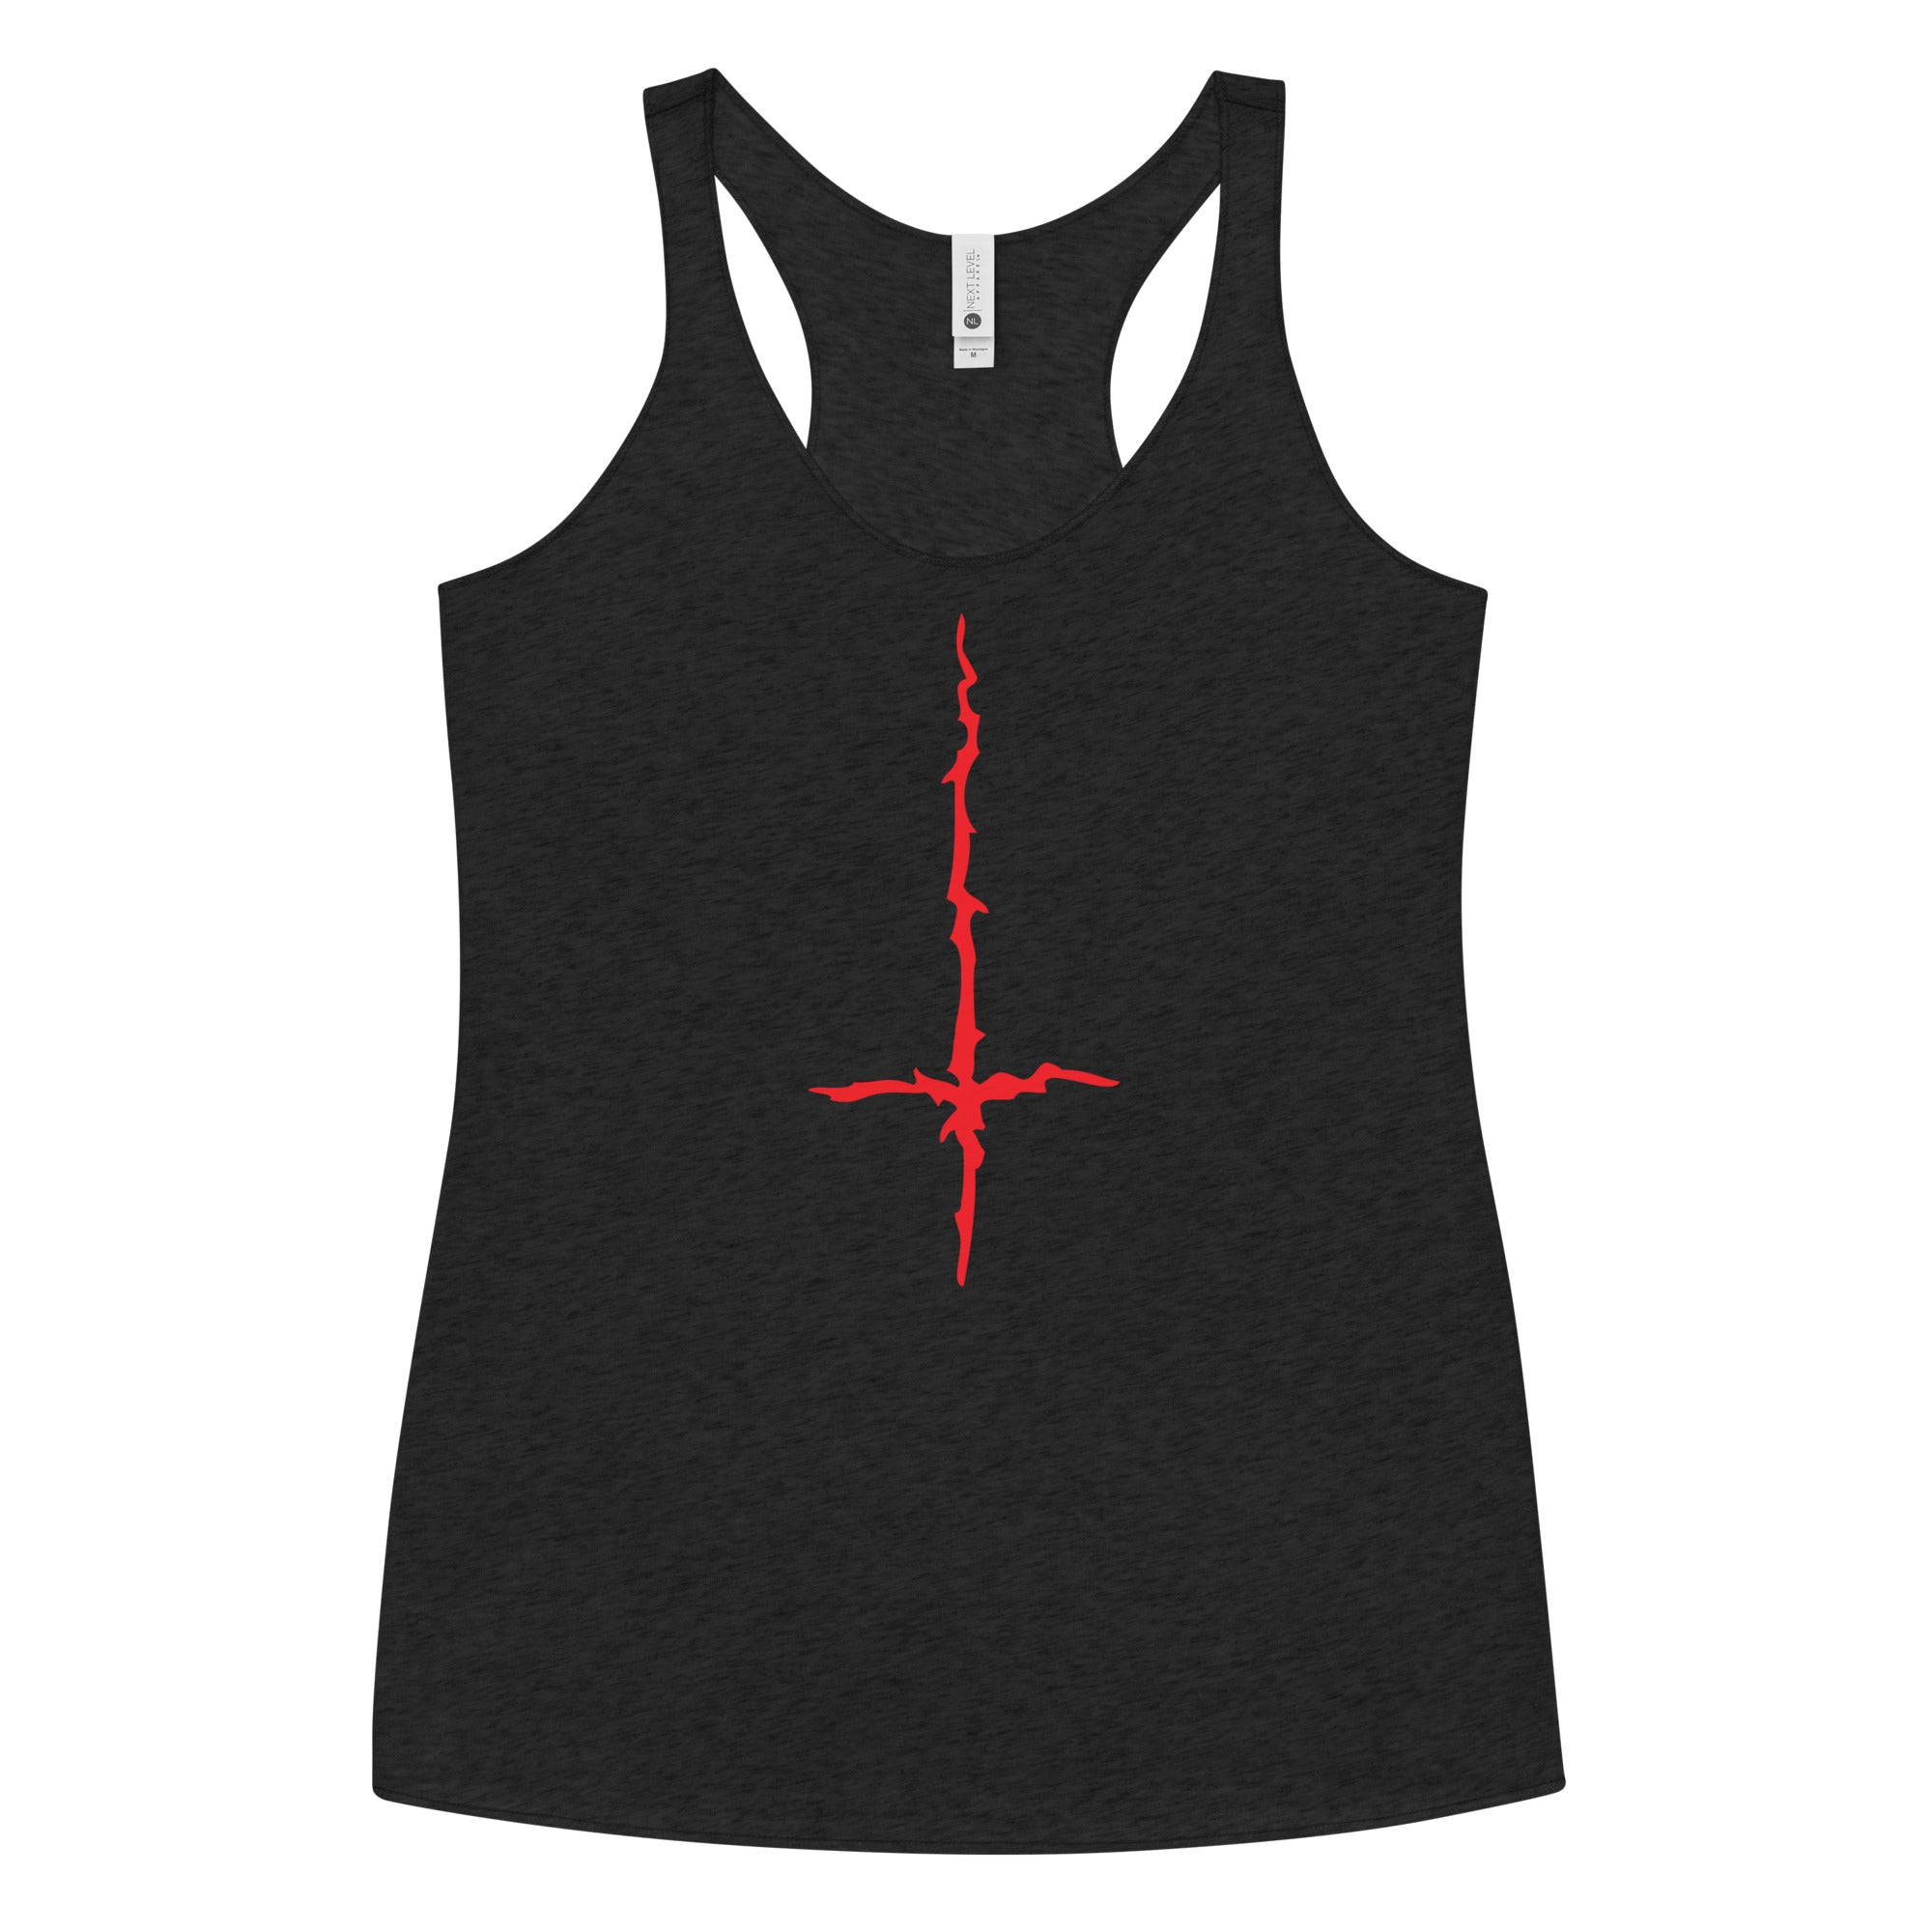 Red Melting Inverted Cross Black Metal Style Women's Racerback Tank Top Shirt